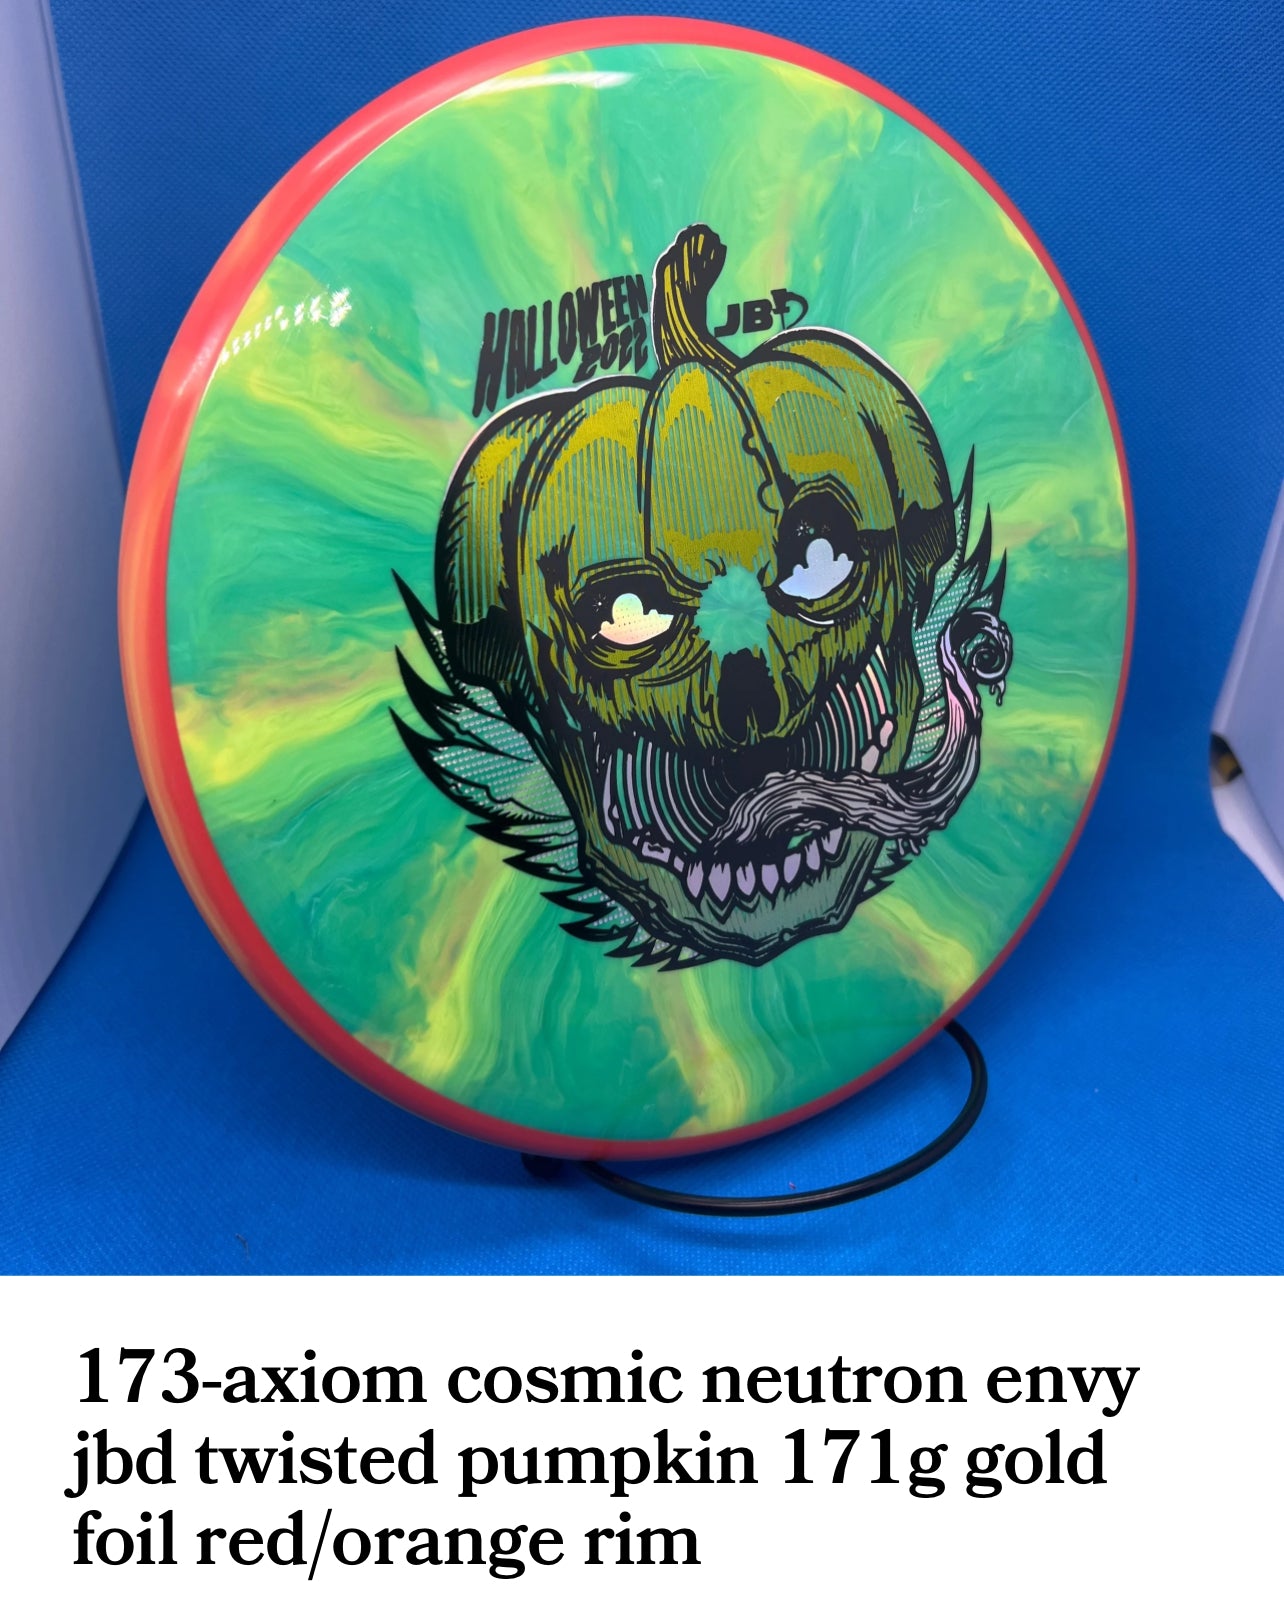 Axiom cosmic neutron envy’s twisted pumpkin JBD custom stamp